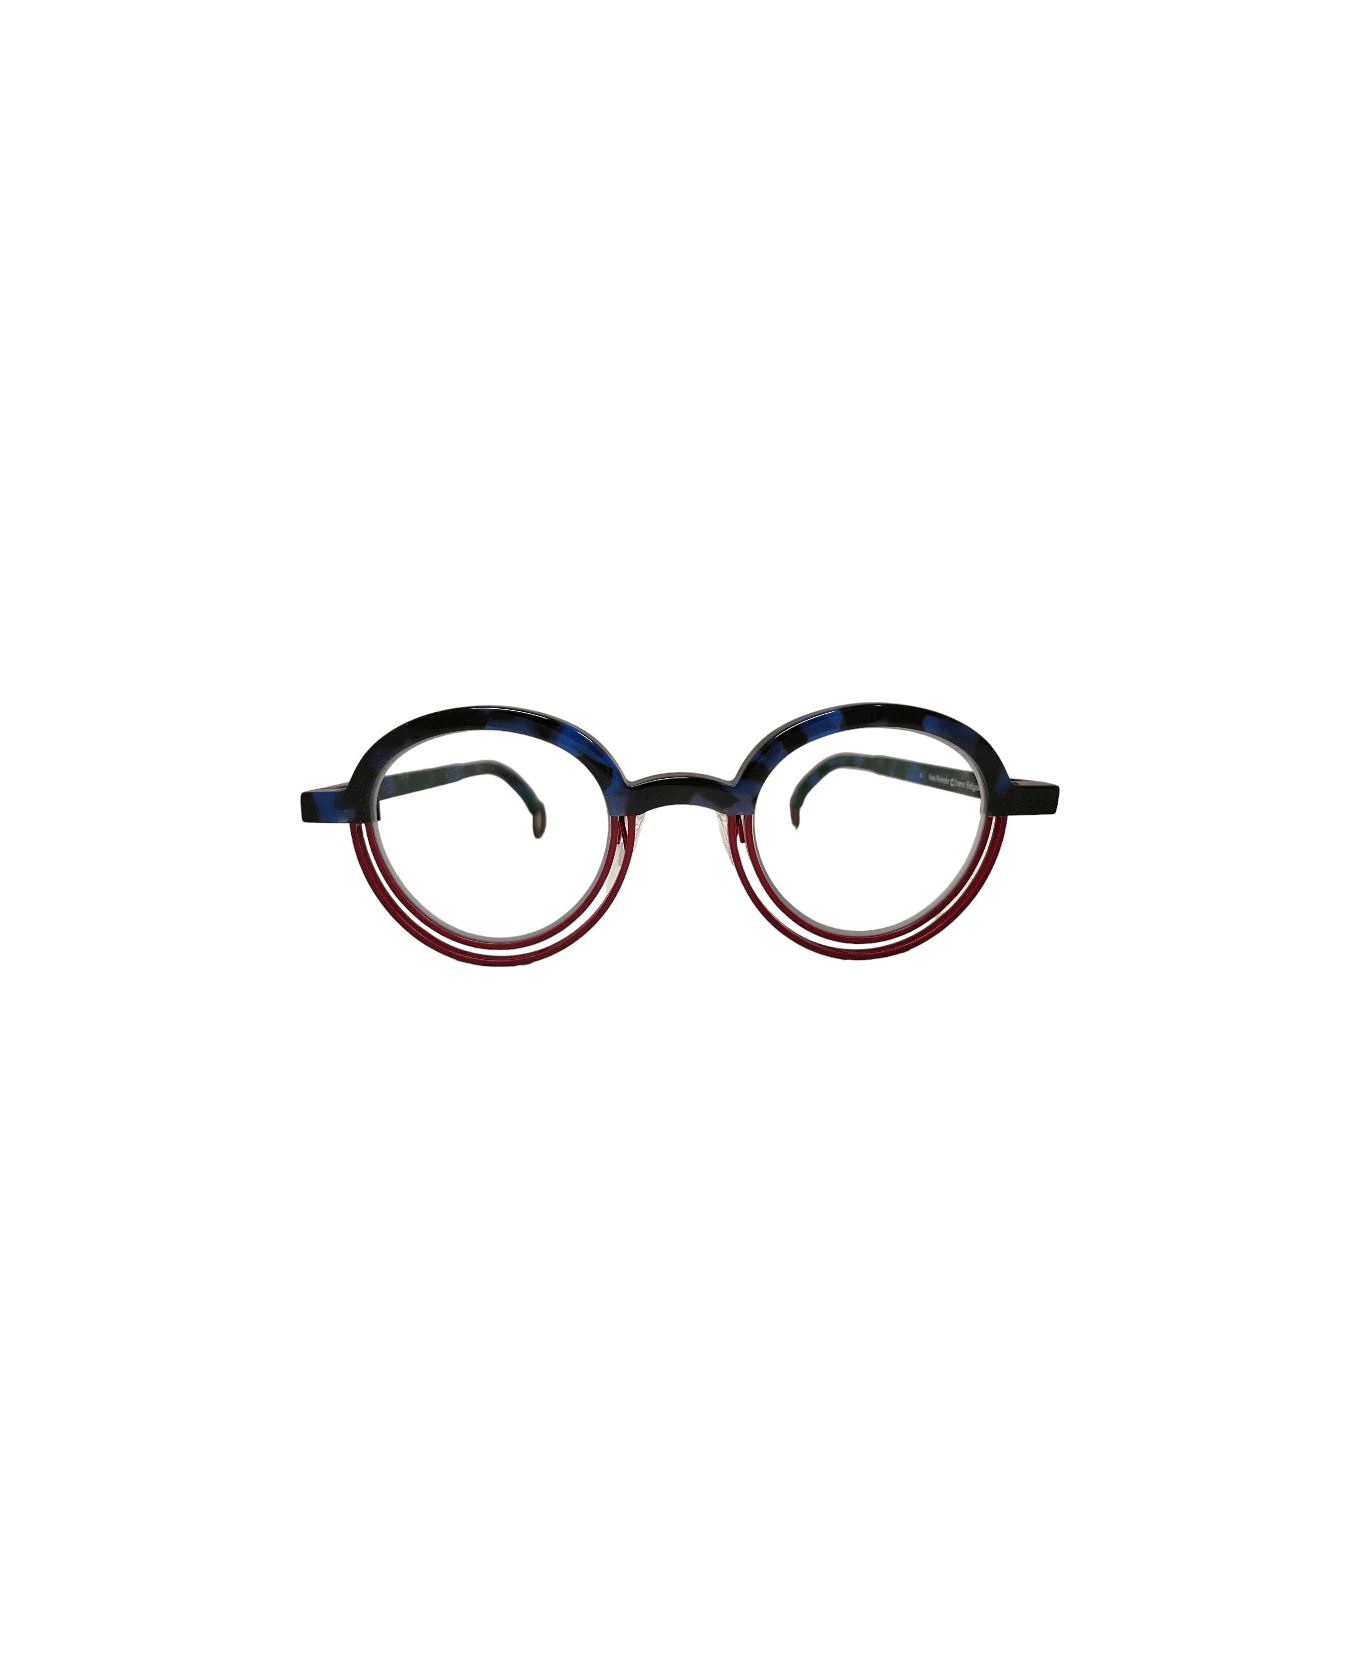 Theo Eyewear Bumper - Red & Blue Glasses アイウェア